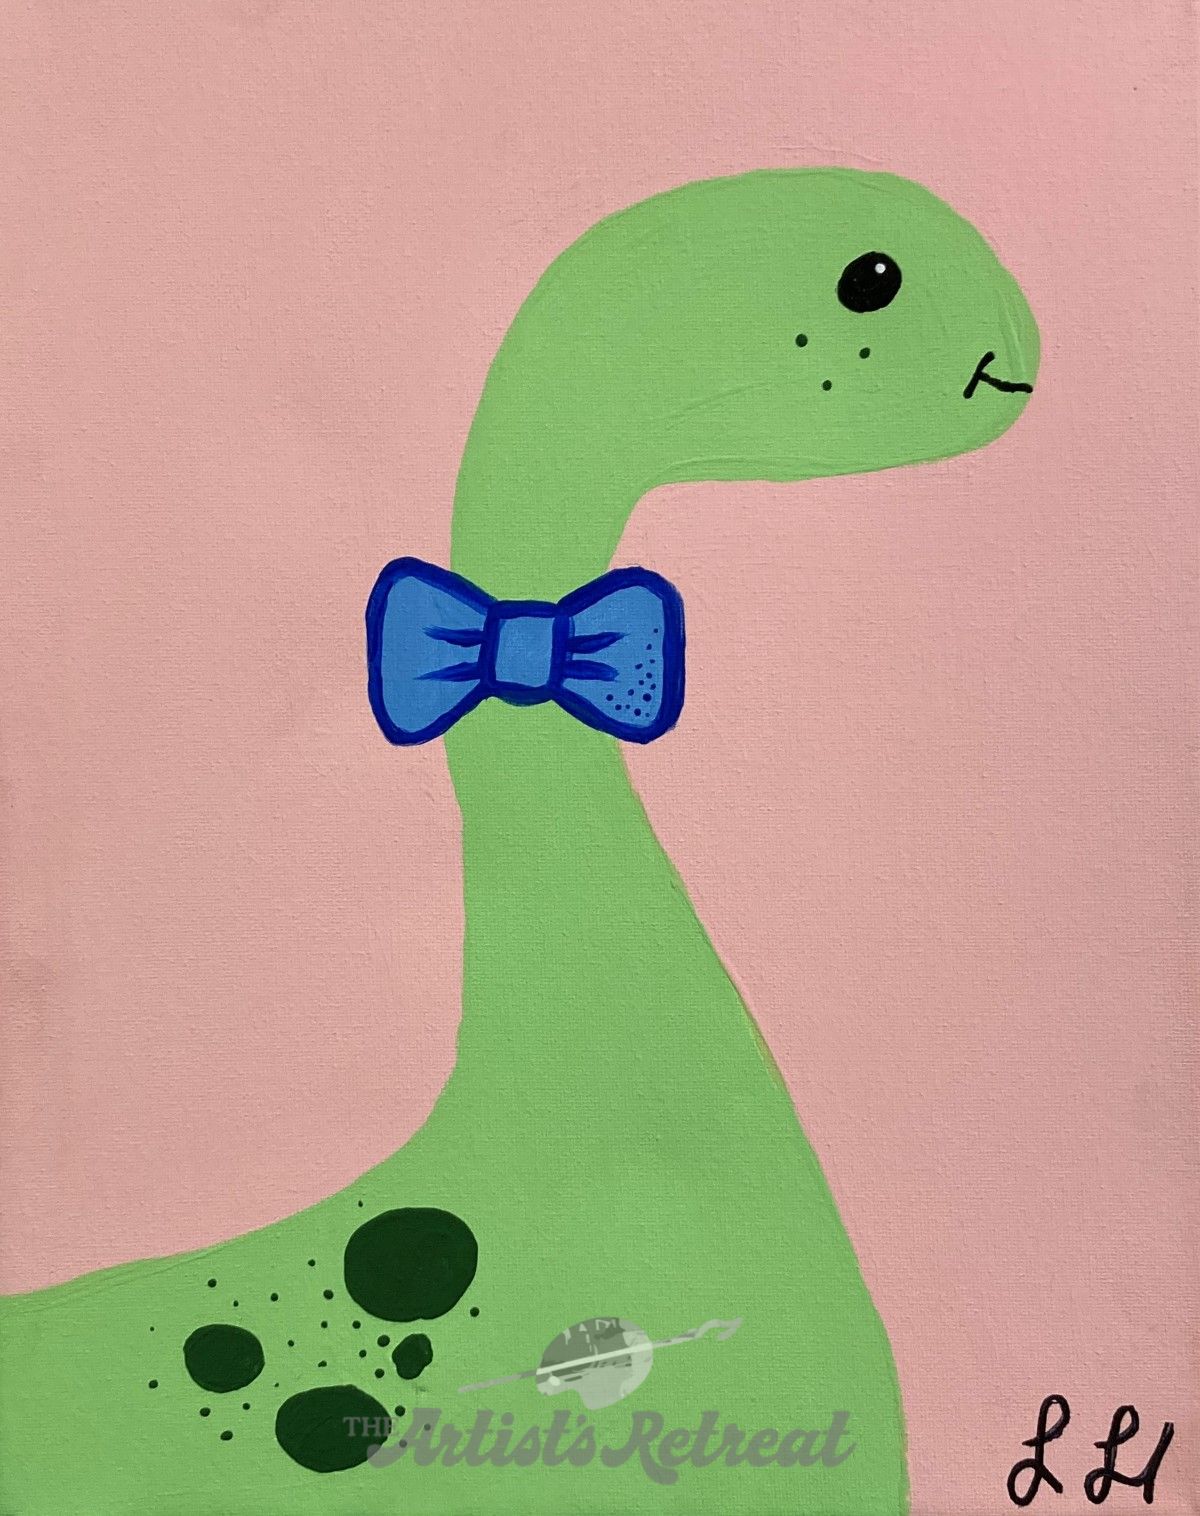 Dino the Dinosaur - The Artist's Retreat